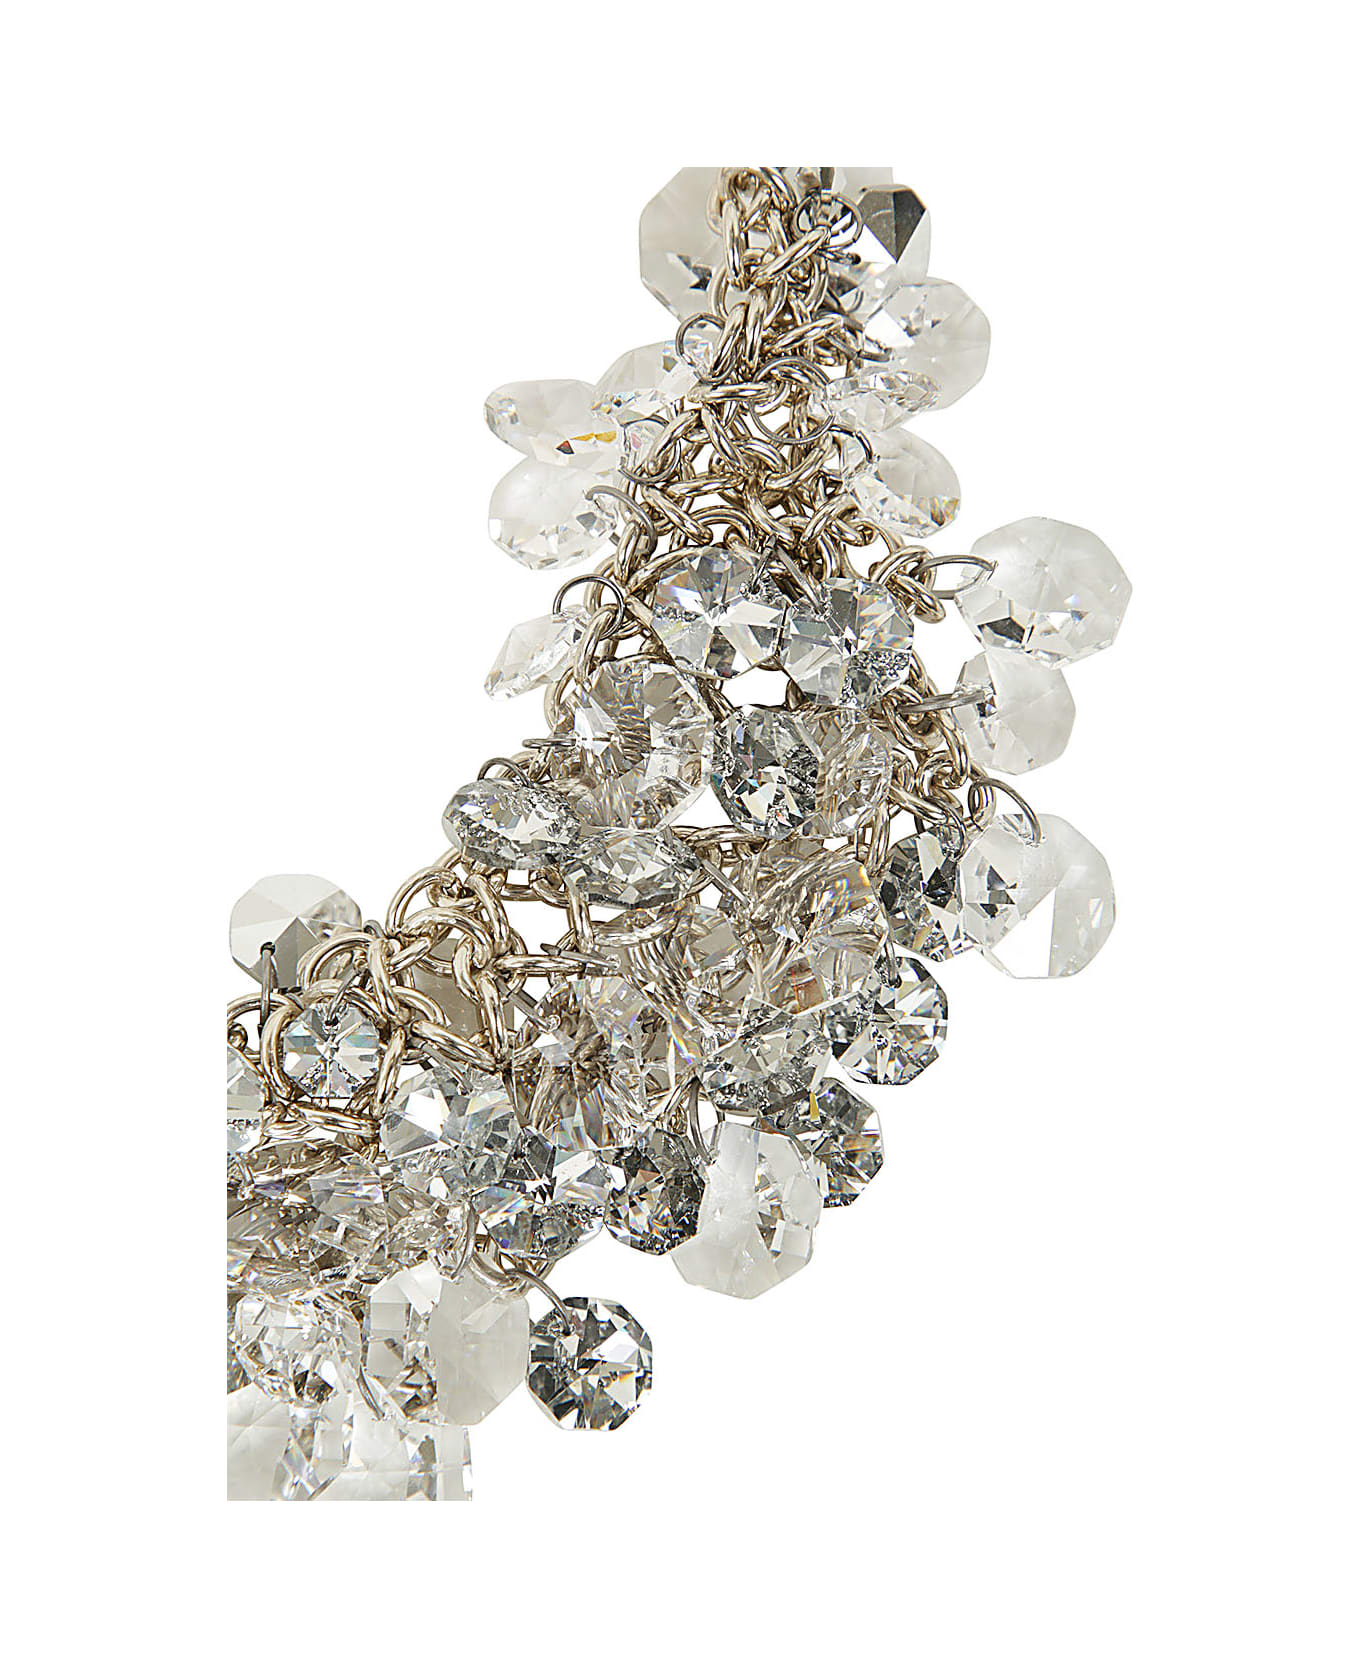 Maria Calderara Crystals And Diamonds Necklace - Tl Trasparent ネックレス